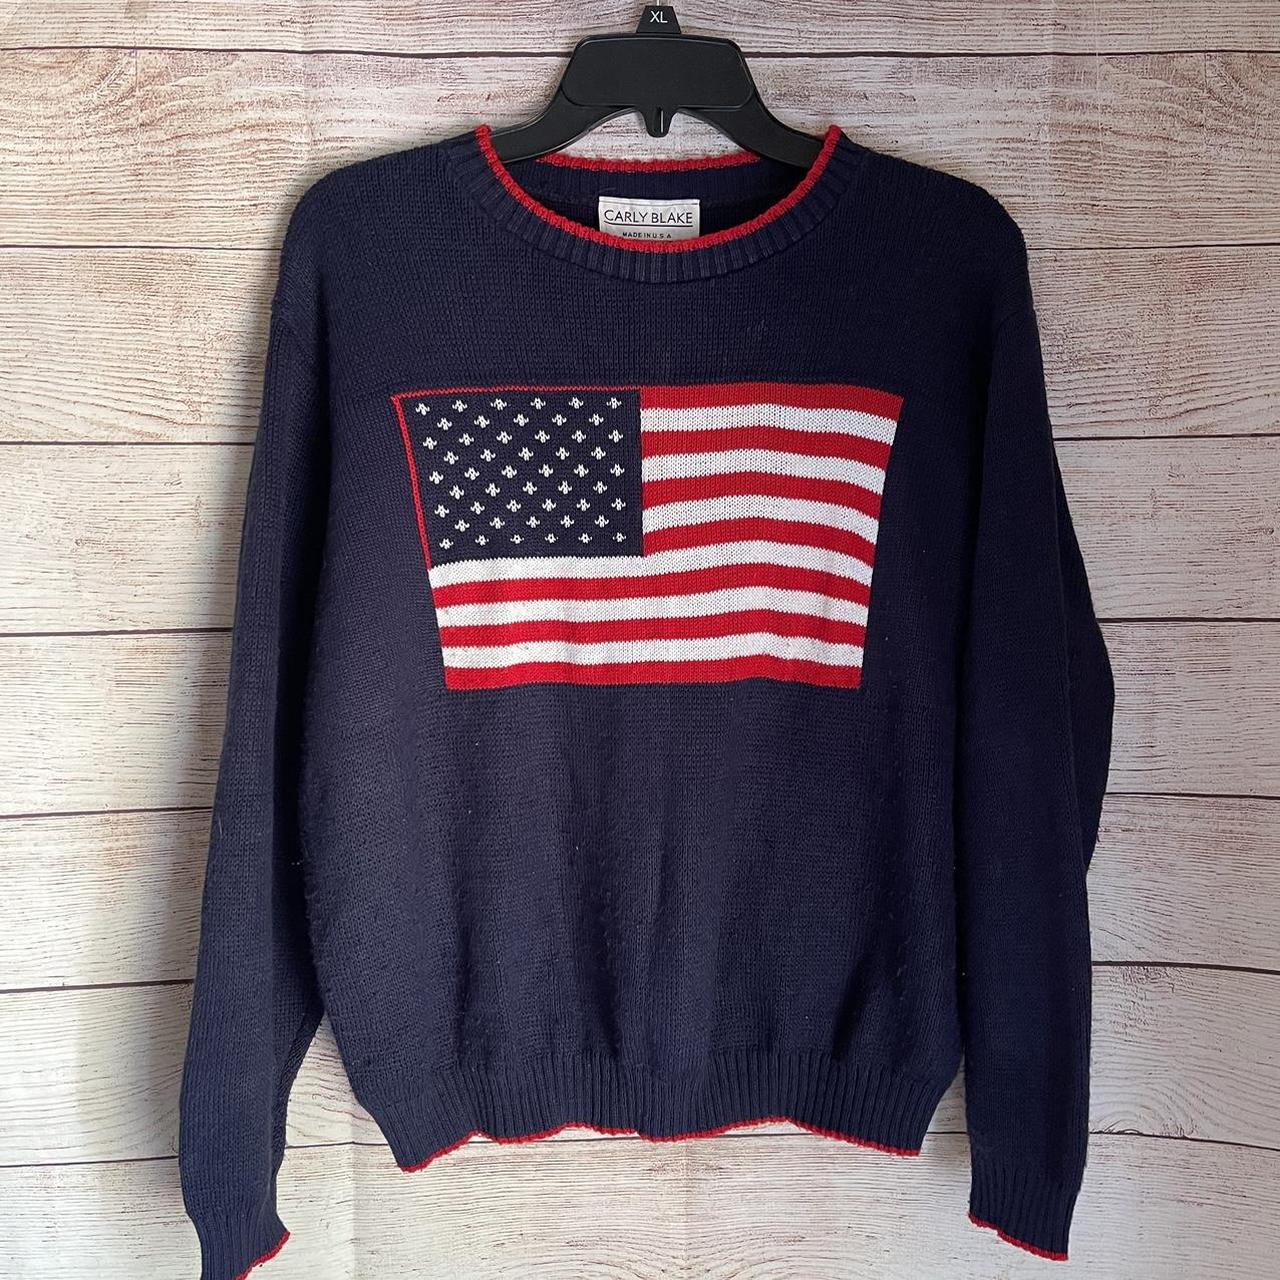 Vintage Carly Blake USA Flag sweater knit acrylic... - Depop